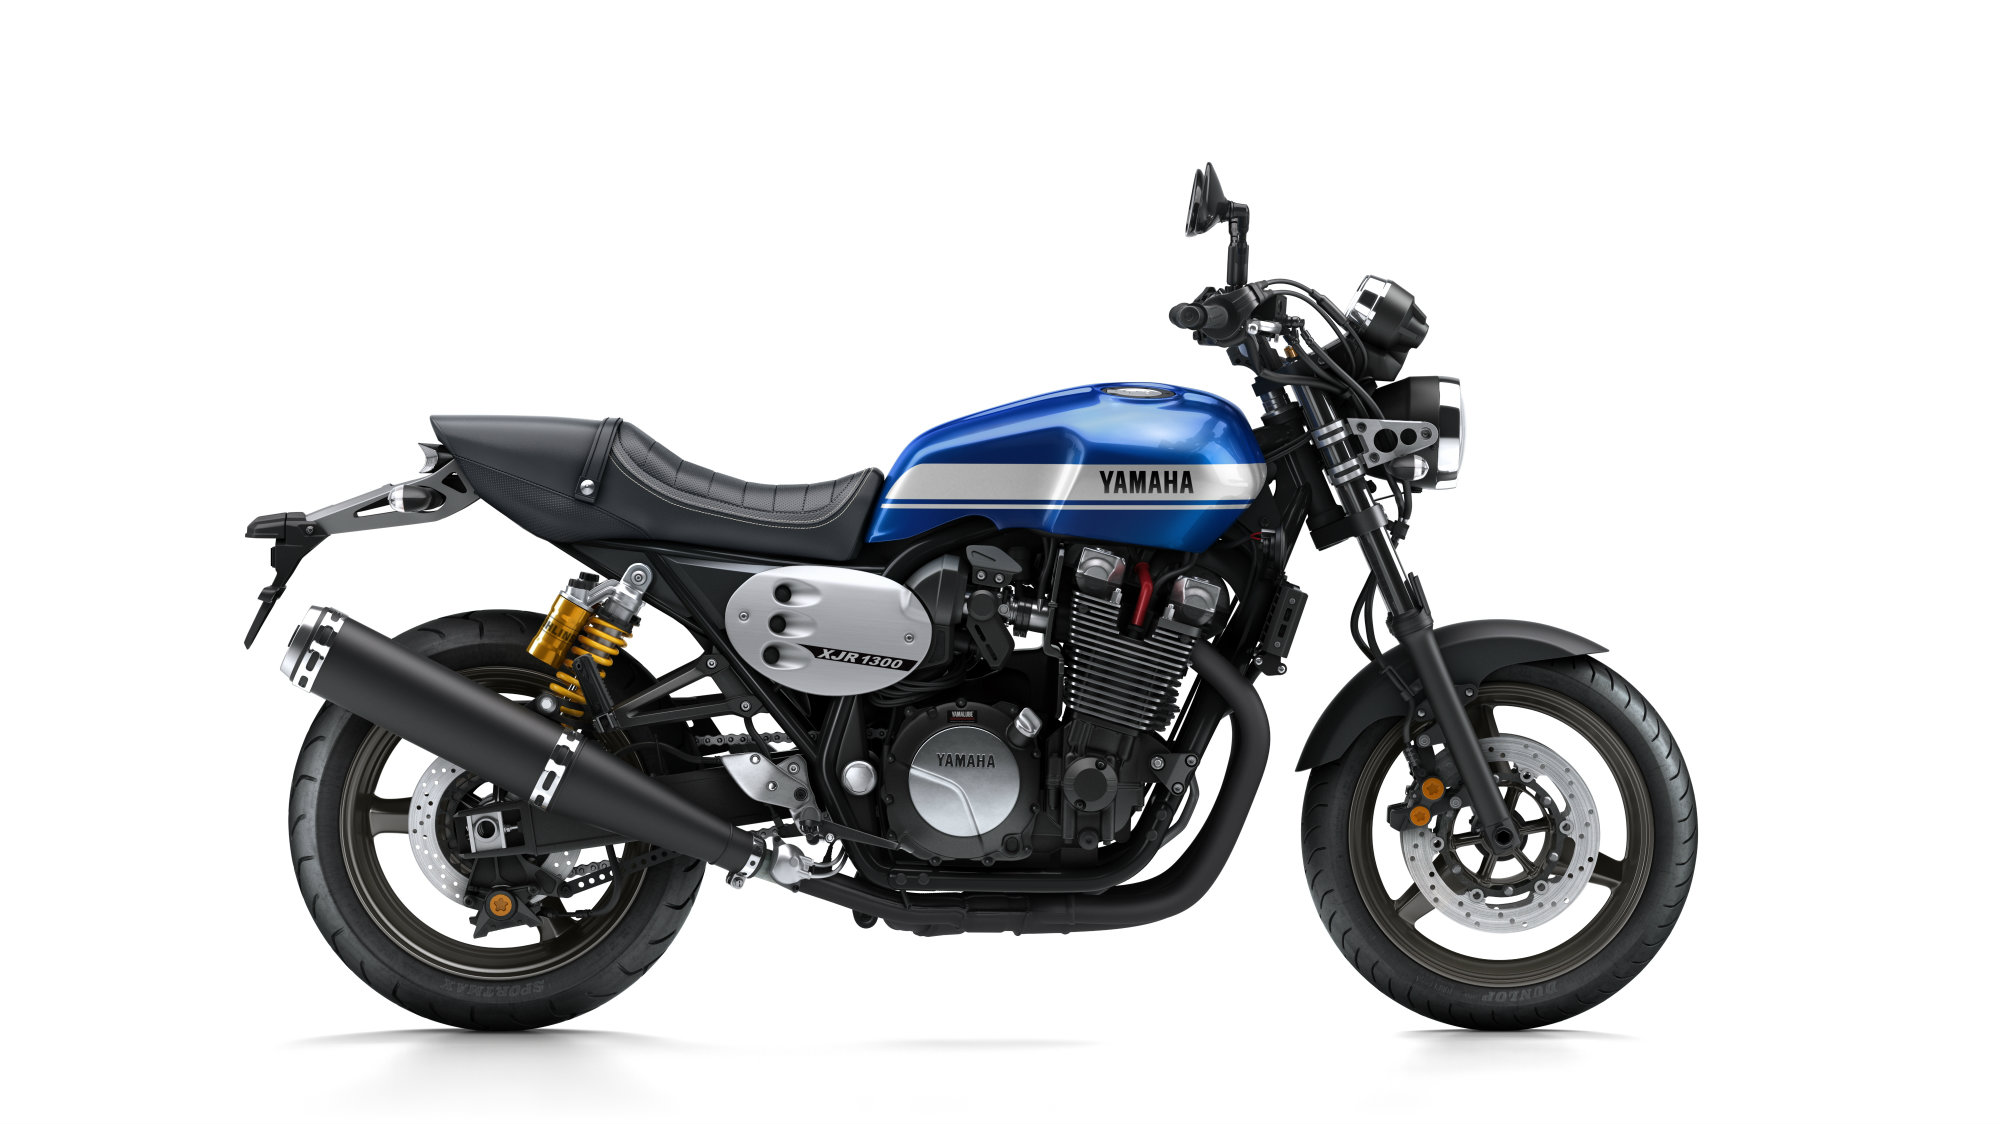 Intermot 2014: New Yamaha XJR1300 unveiled